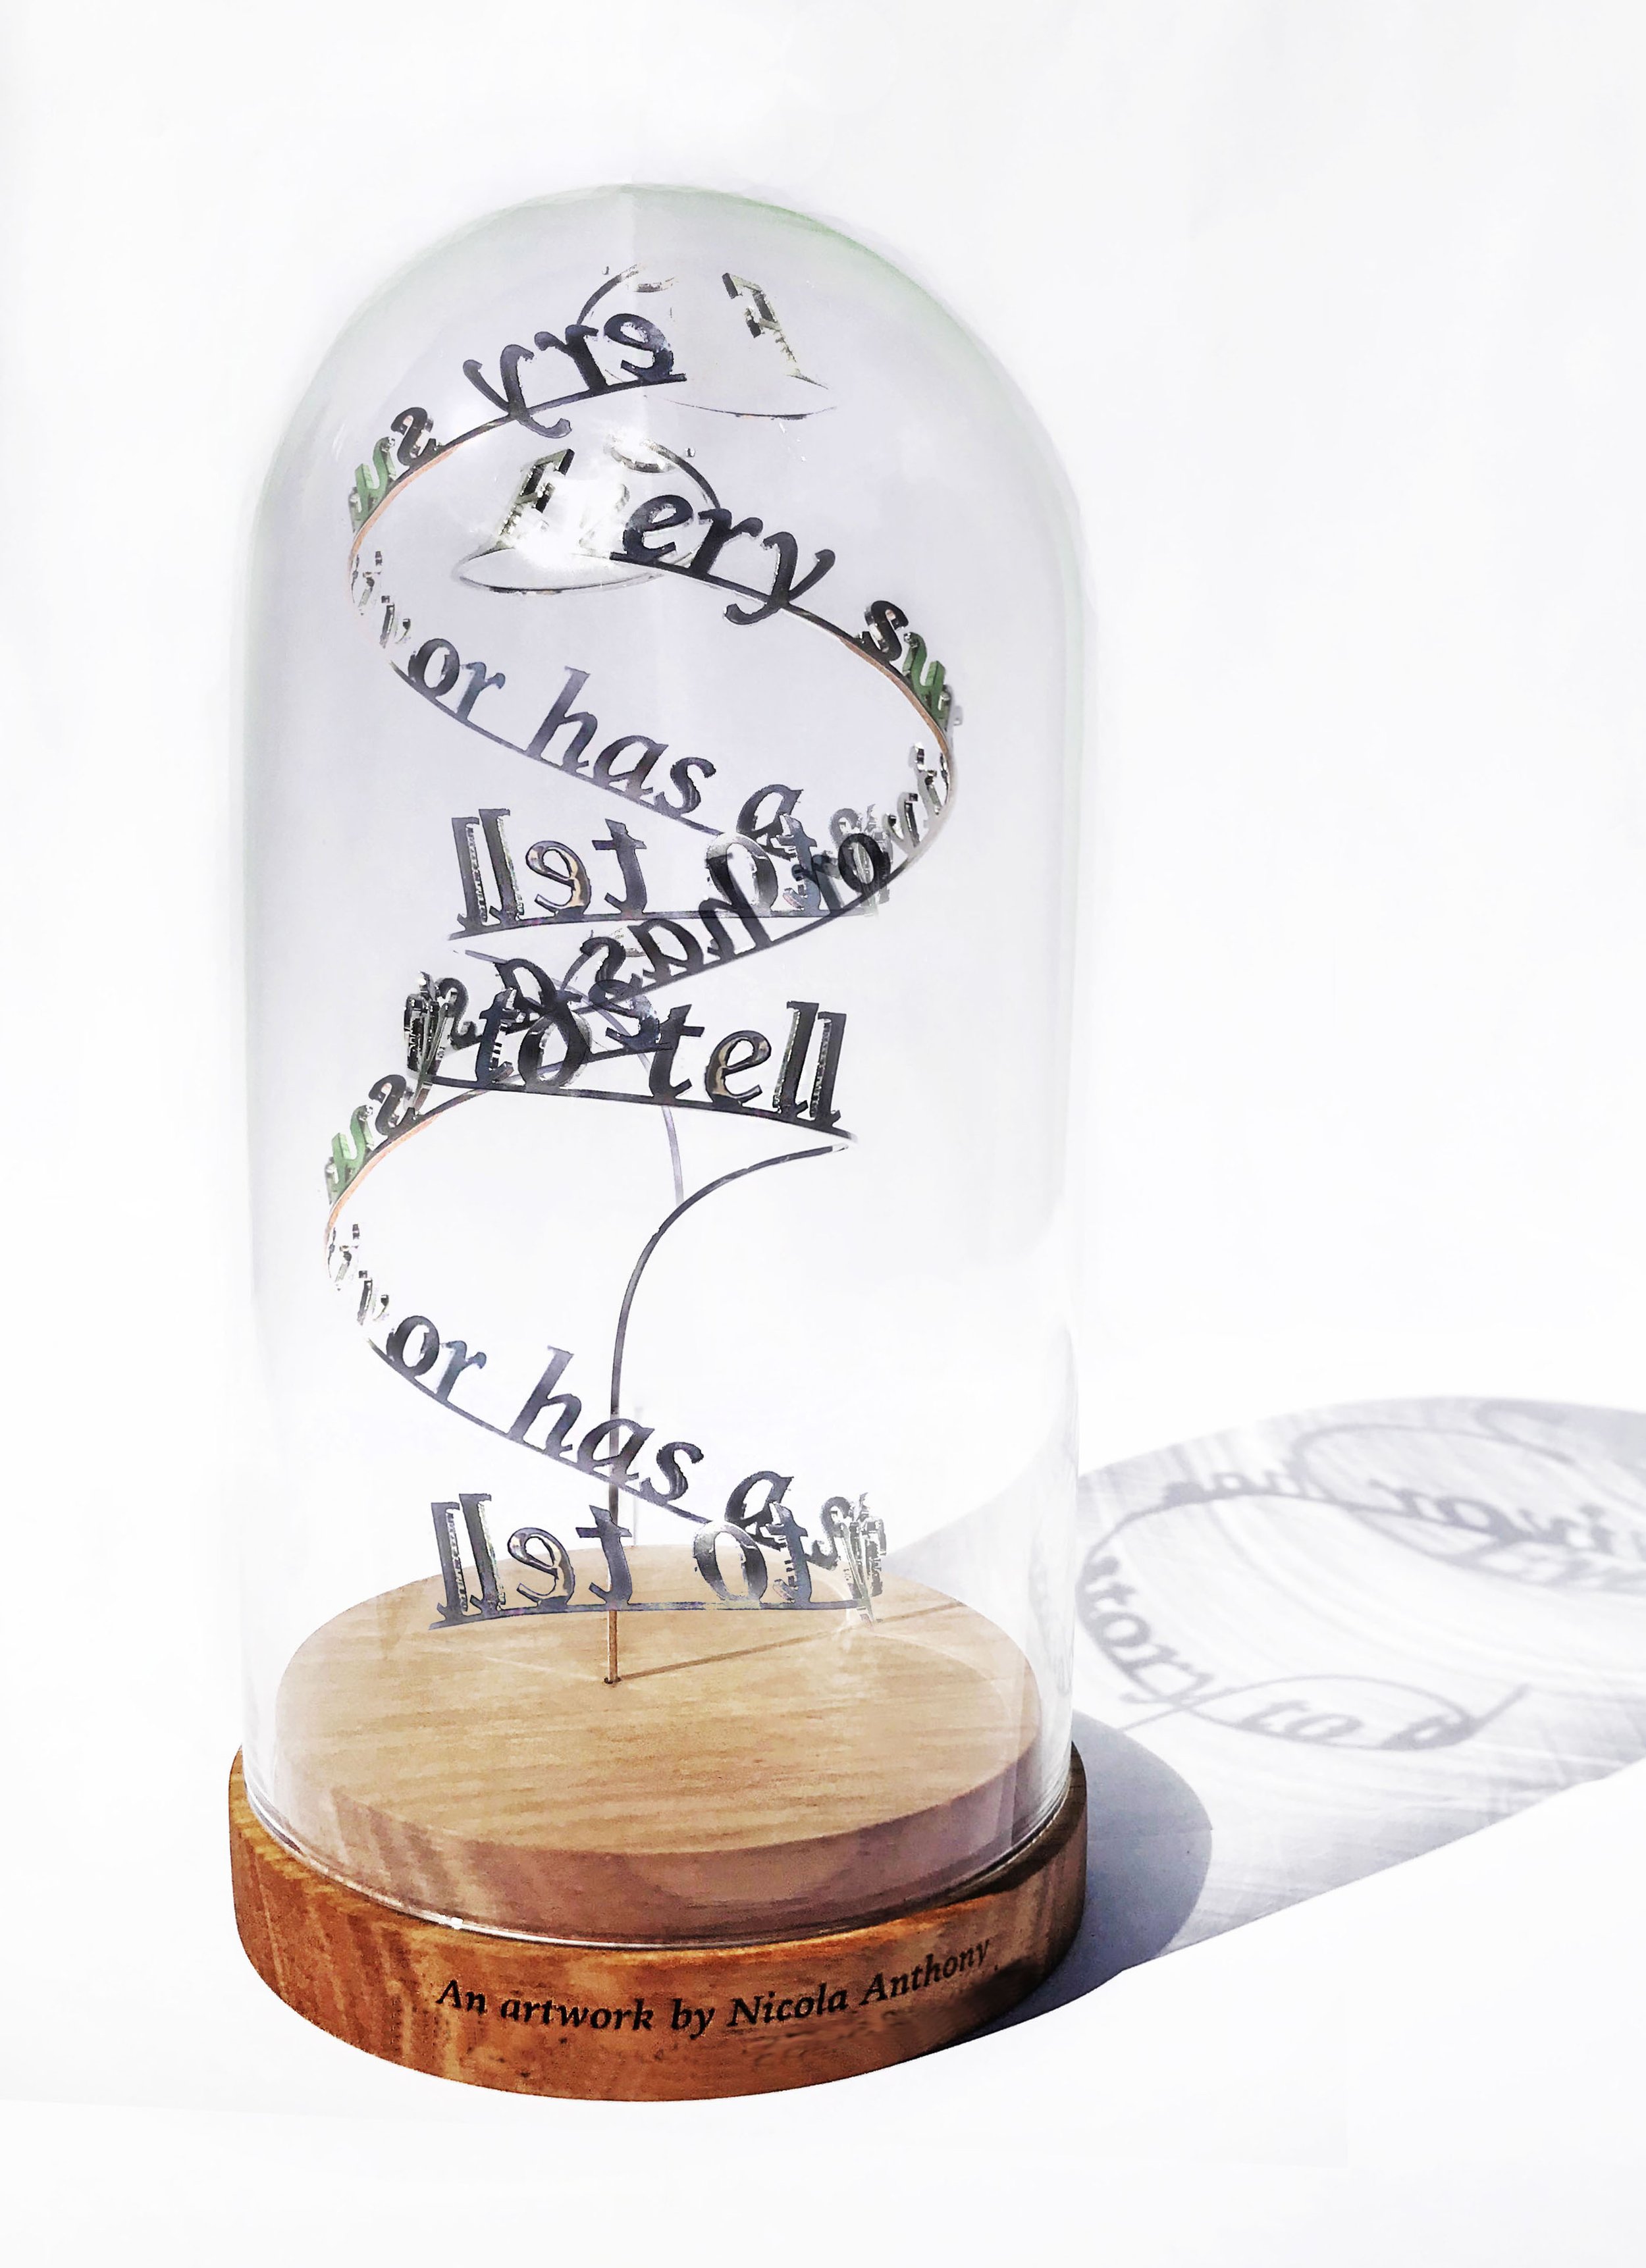 Every Survivor has a story to tell (c) Nicola Anthony-2022 - Medium Bell jar artwork